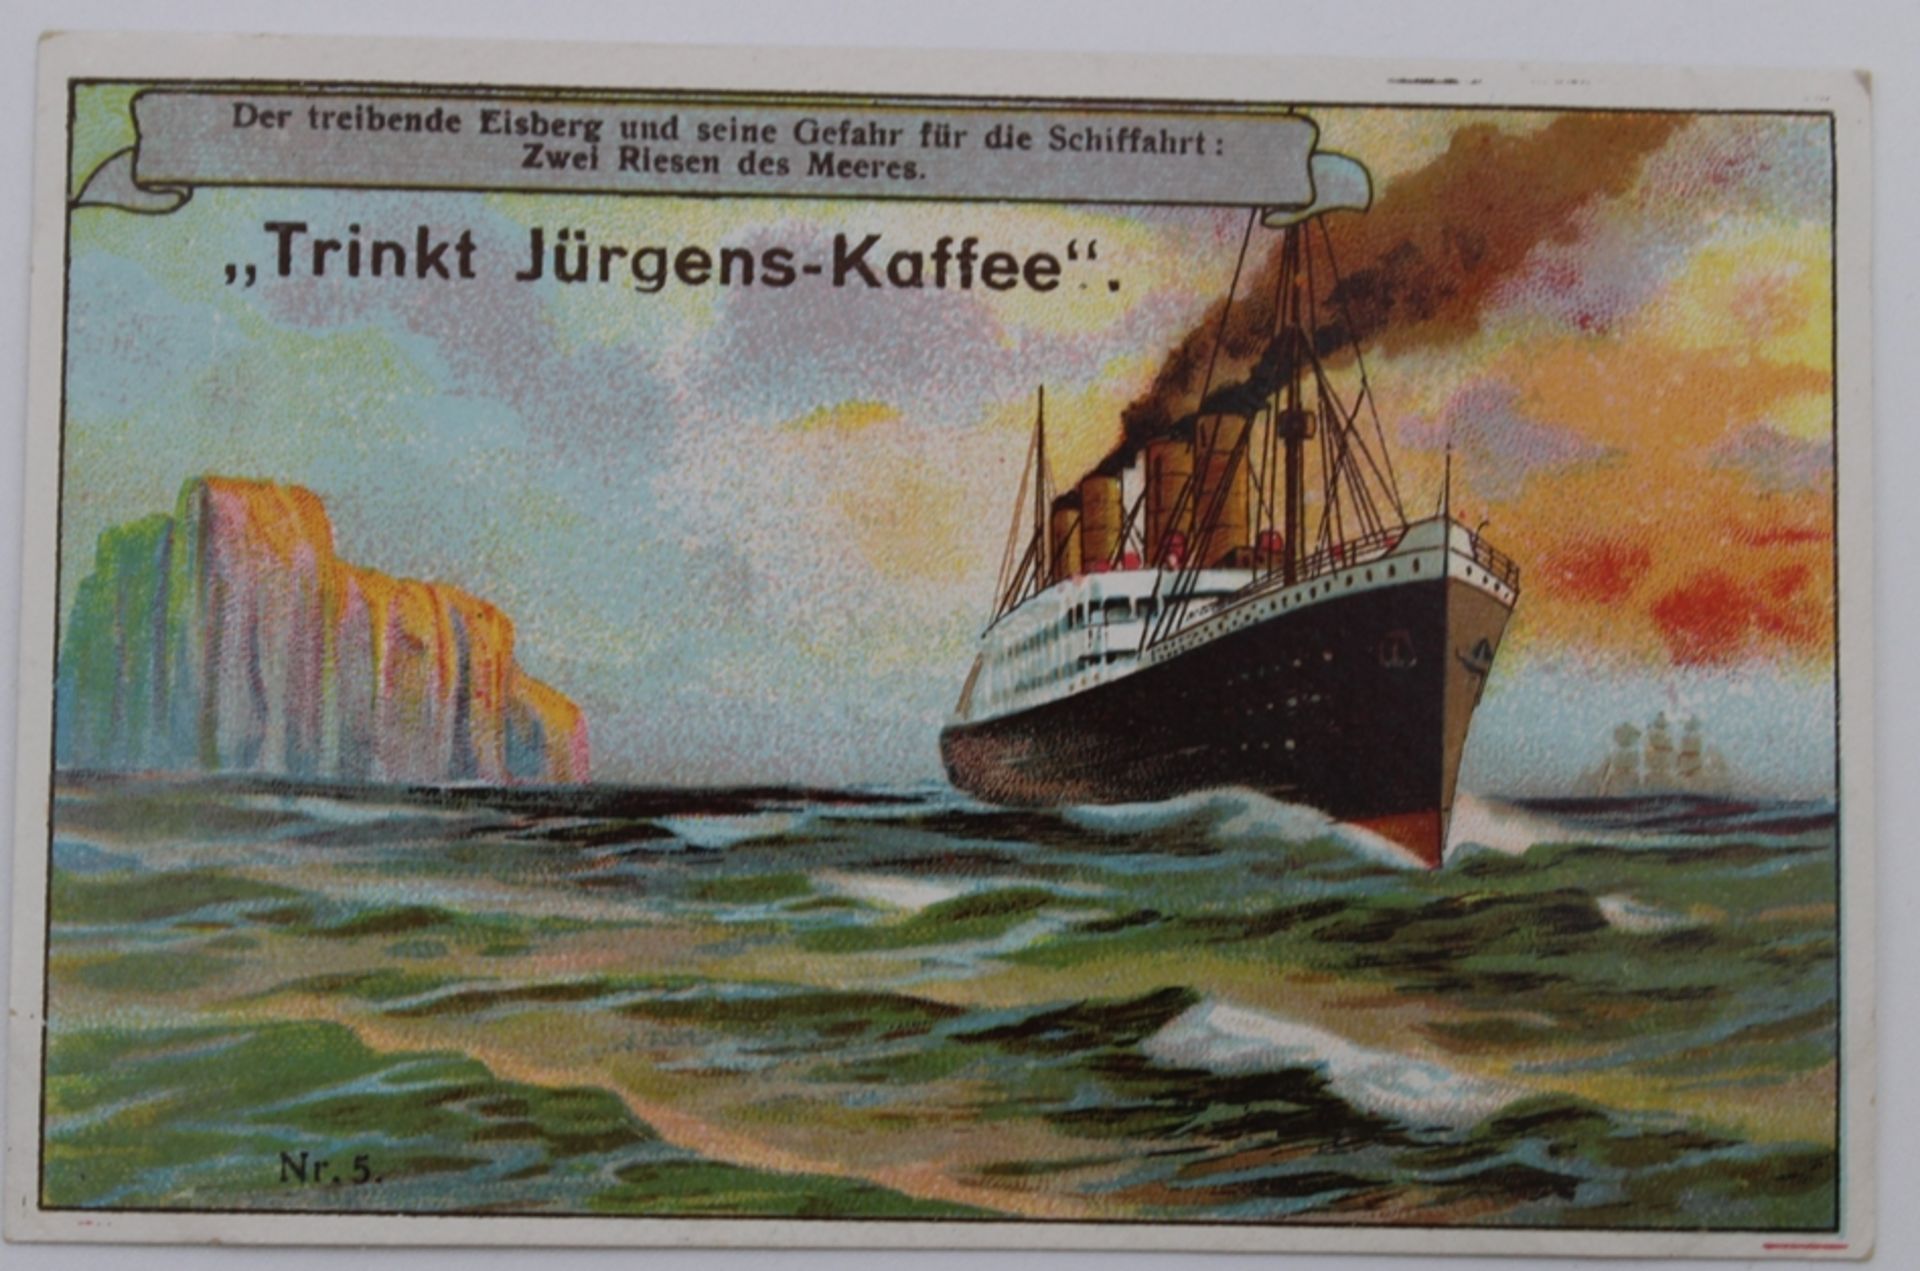 Sammelbilder-Album, Jürgens Kaffee, nicht komplett befüllt, - Bild 4 aus 7